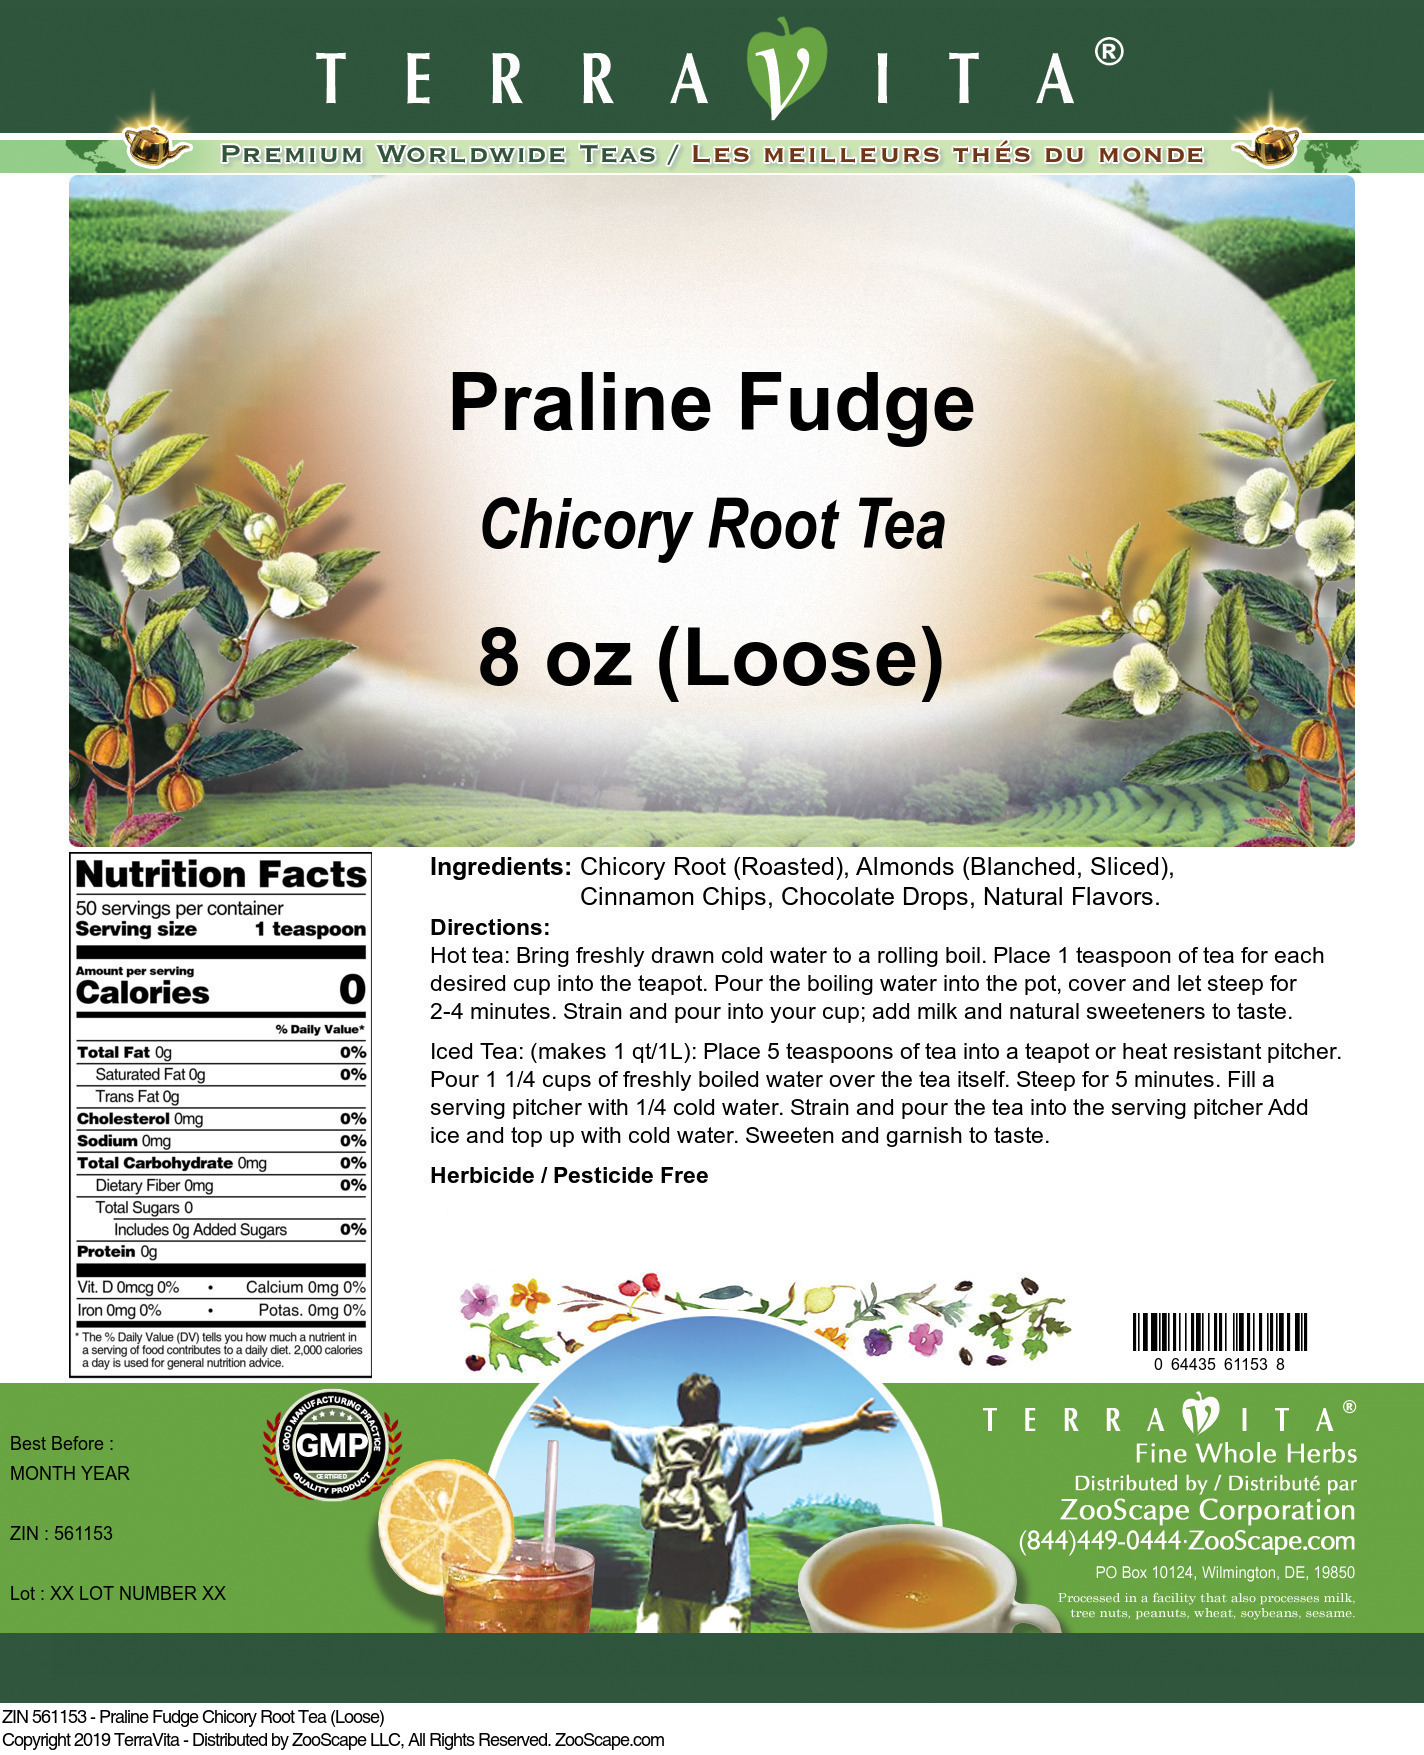 Praline Fudge Chicory Root Tea (Loose) - Label